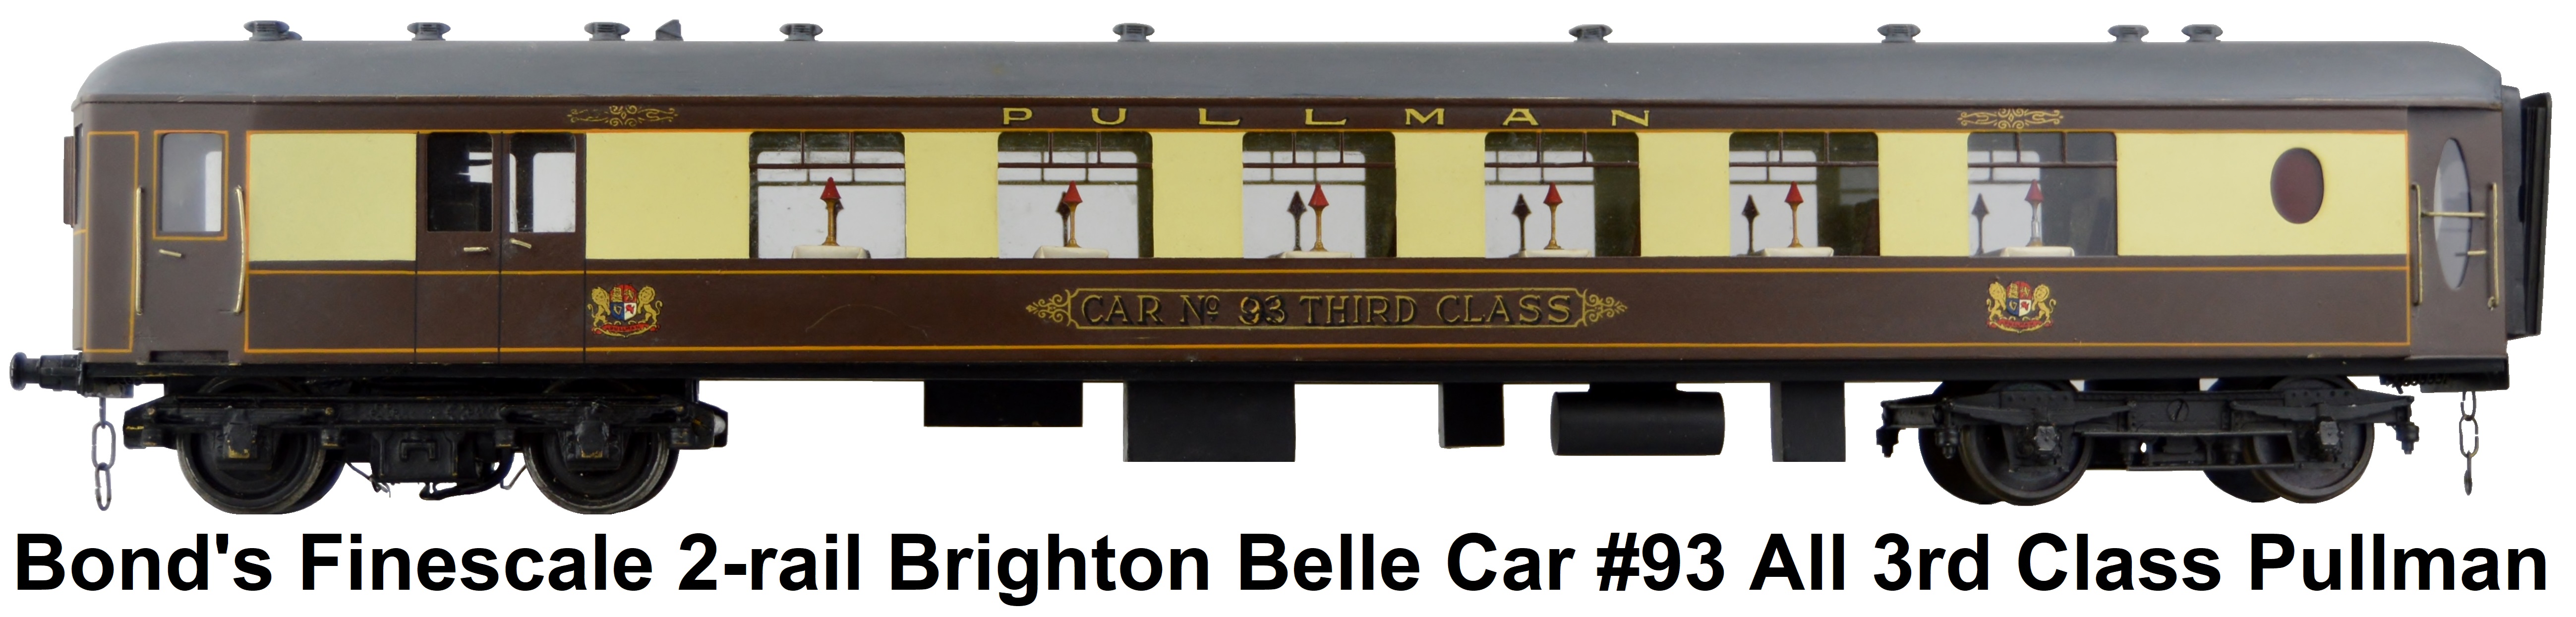 Bonds of O'Euston Road Ltd., London finescale 2-rail Brighton Belle All 3rd class car #93 Pullman Motorcar